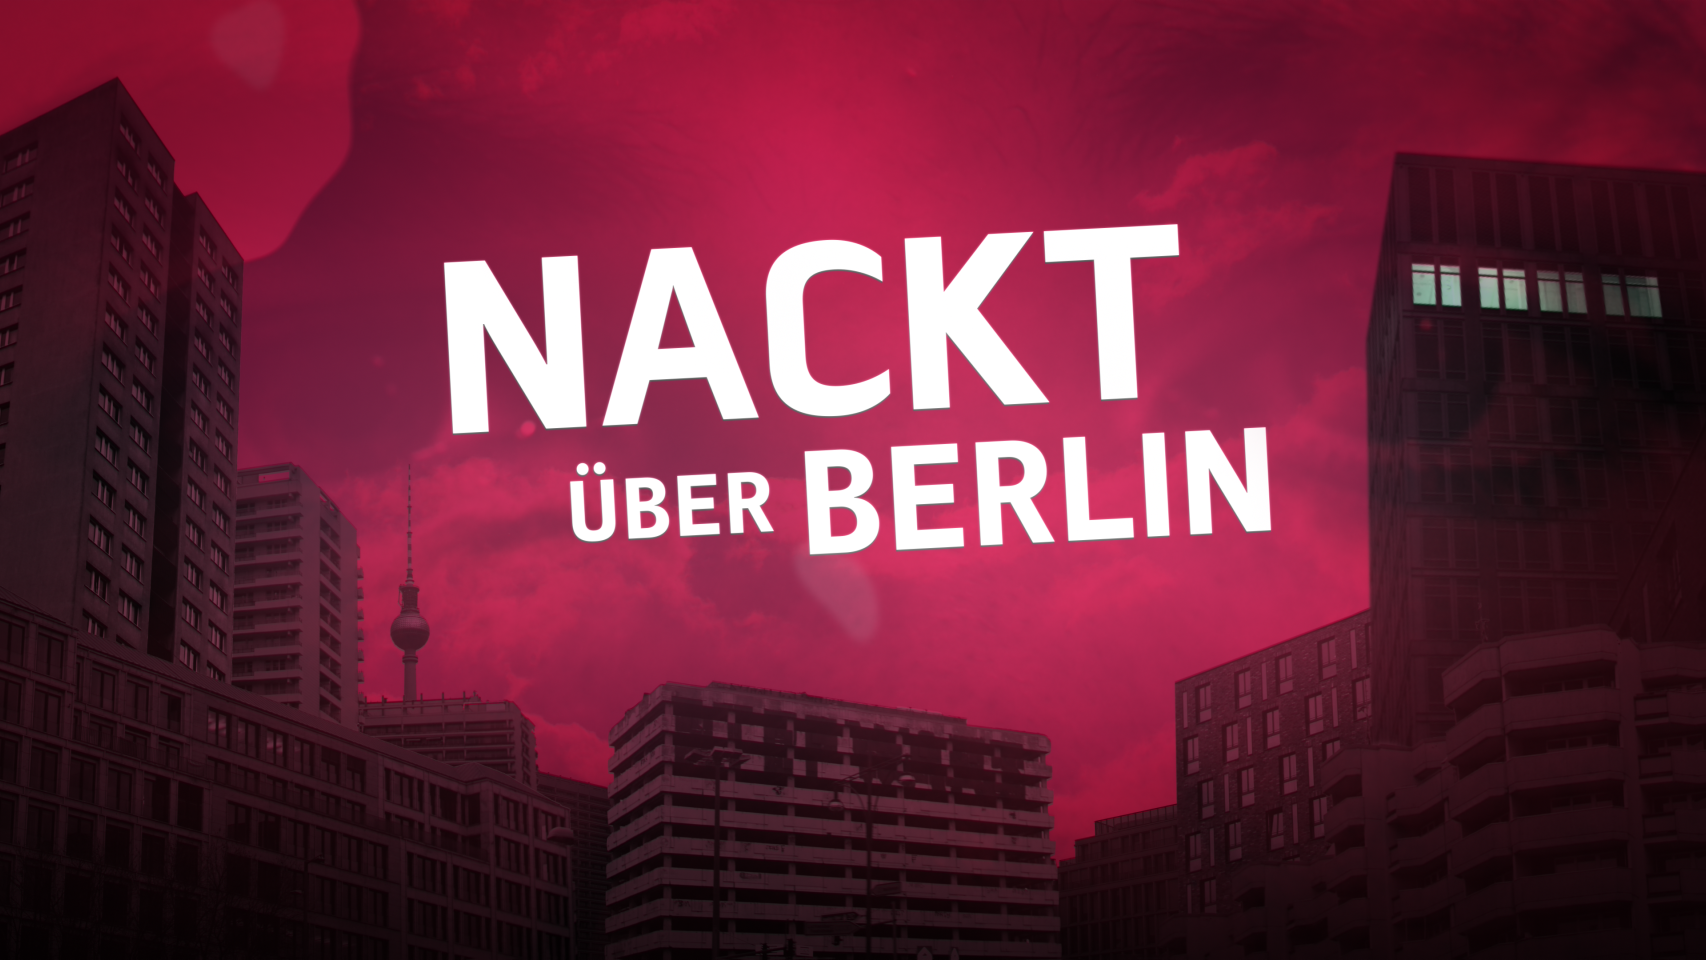 Nackt über Berlin (Intro-Animation) - teaser iimage